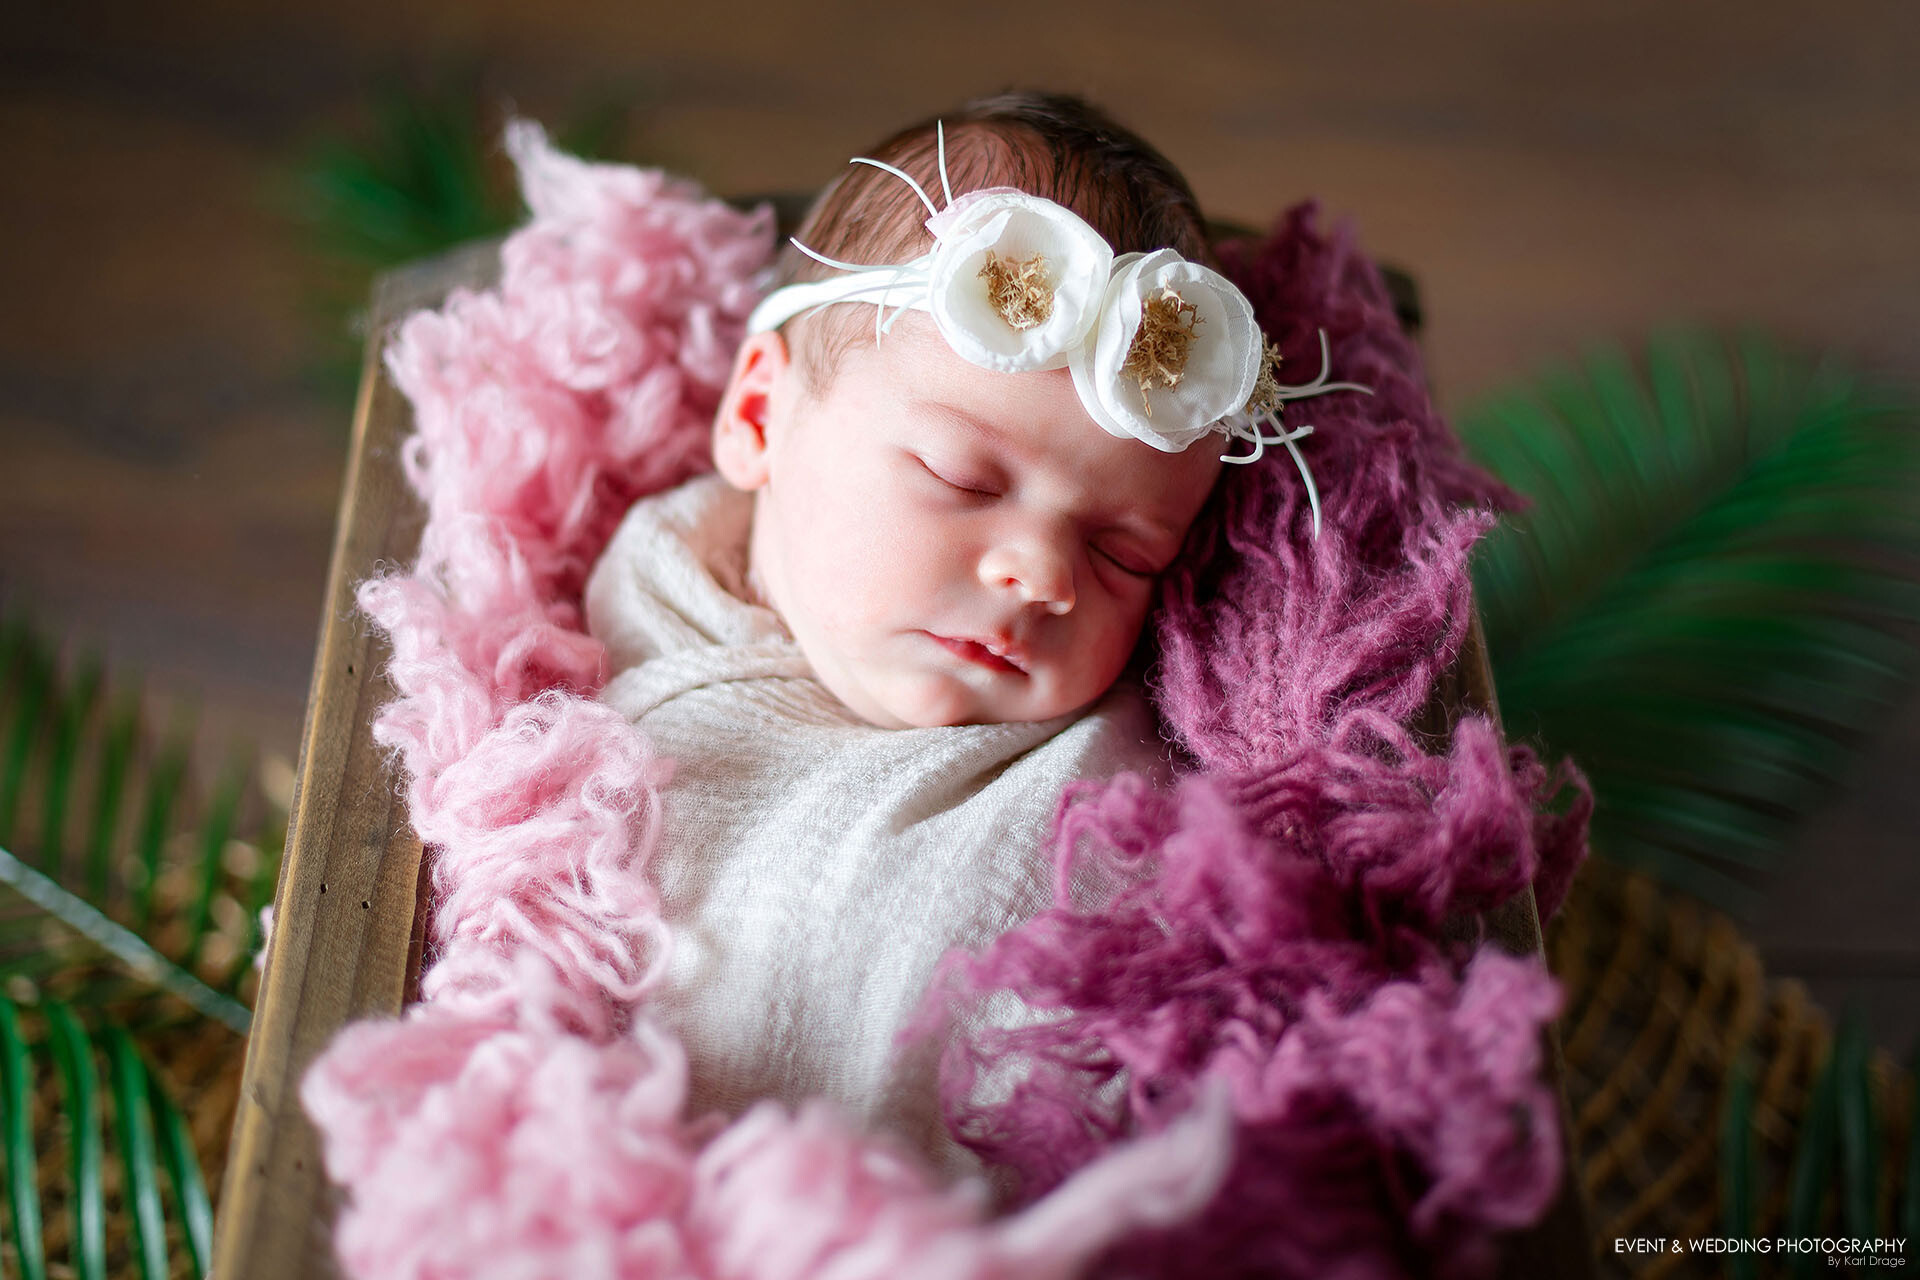 Newborn baby girl wearing a floral headband asleep in a wooden crib photo prop